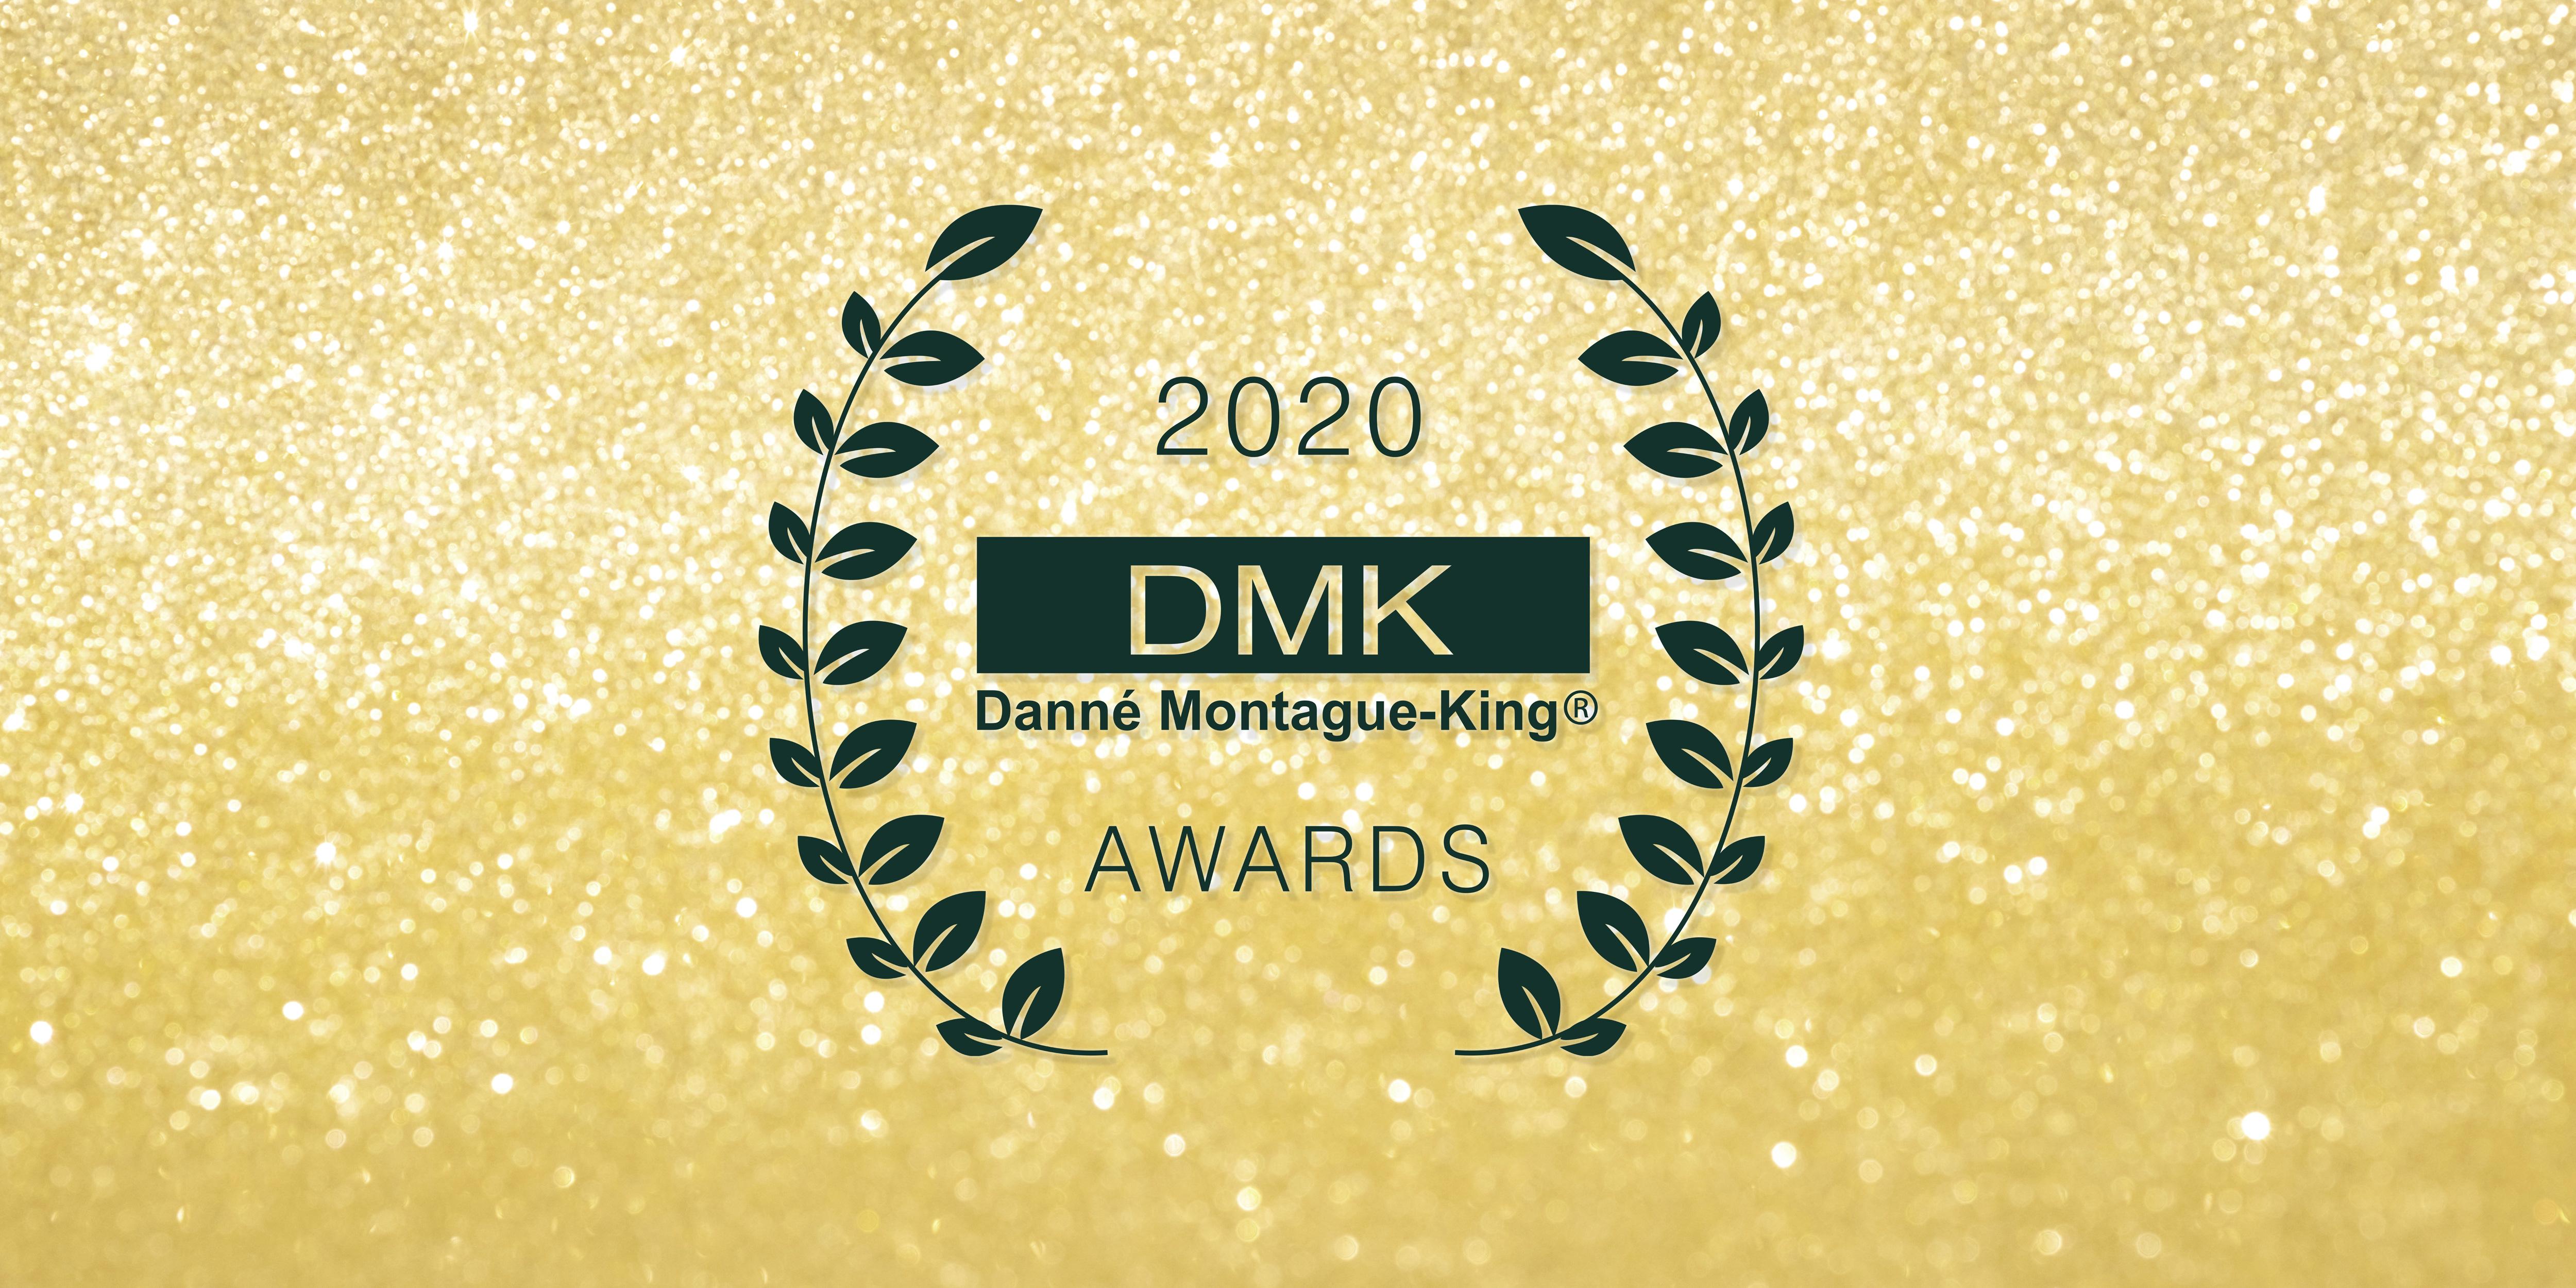 DMK Awards Dinner 2020 & Product Launch Demos